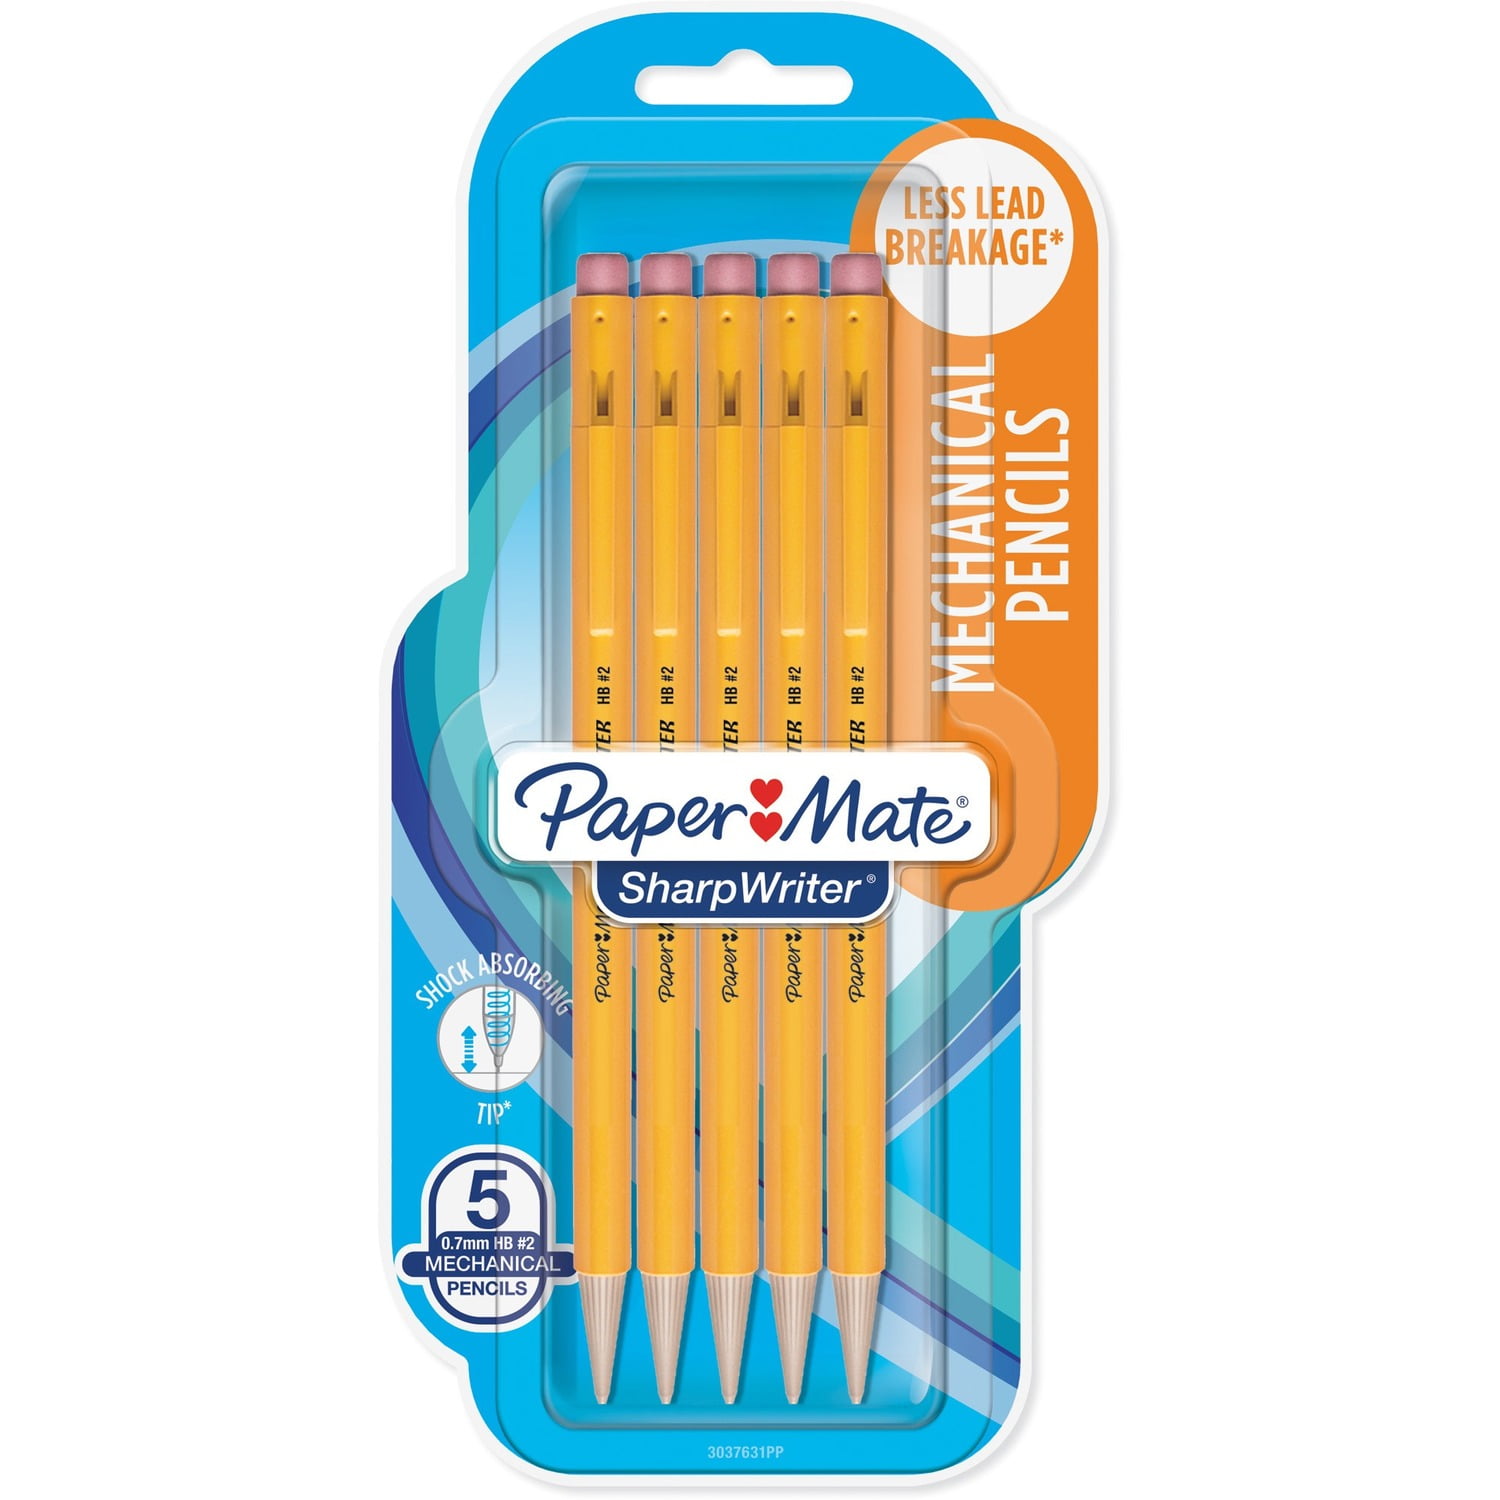 HB Pencils – Margret puts pen to paper